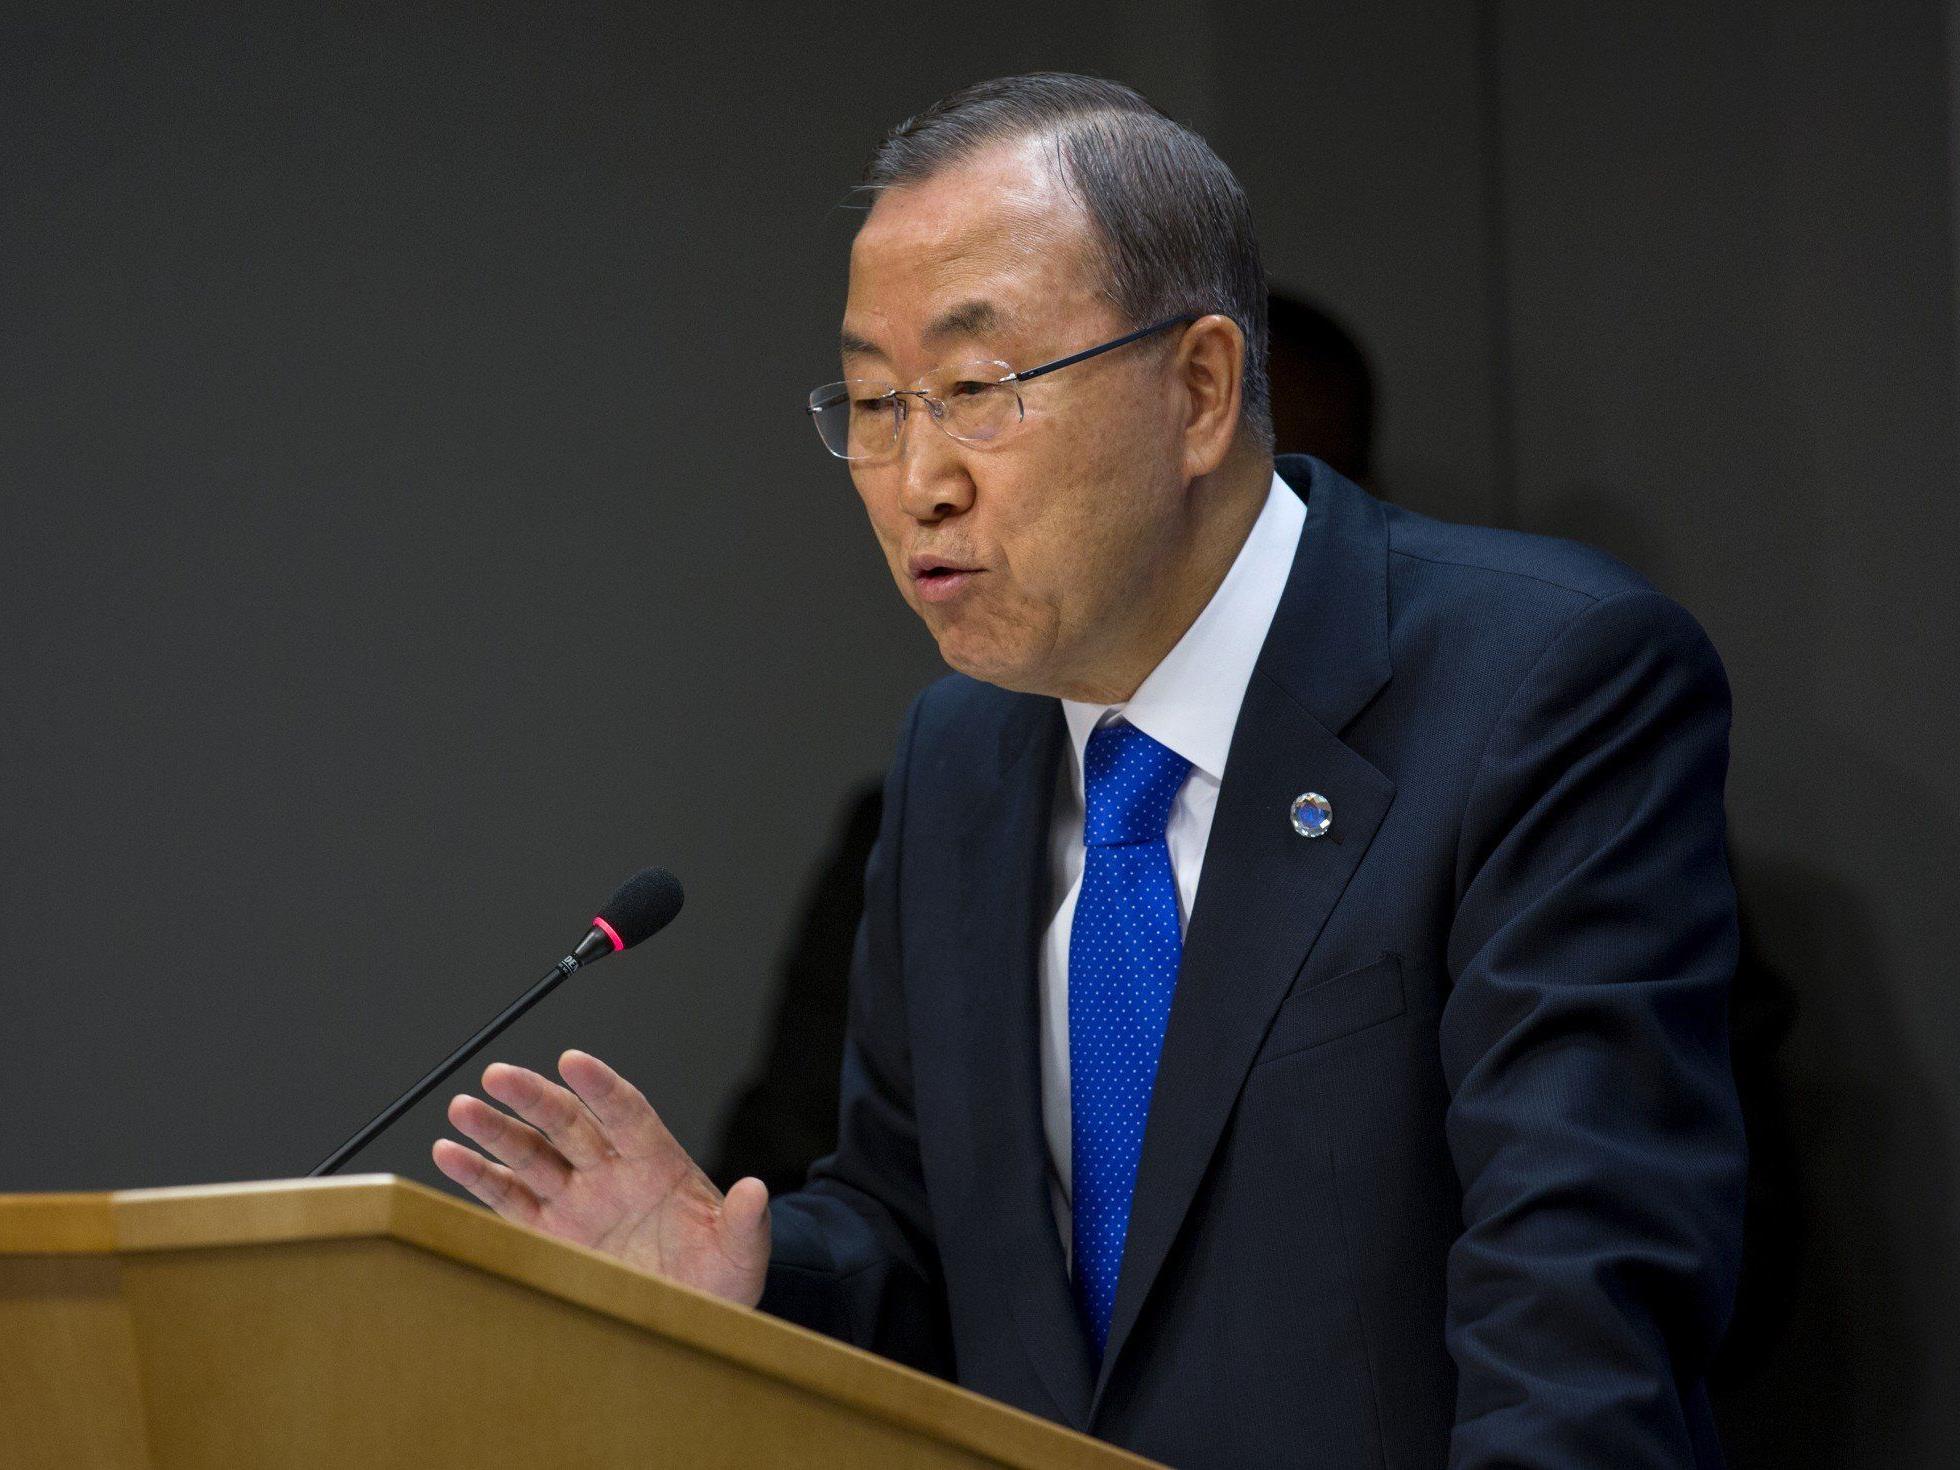 Generalsekretär Ban Ki-moon hat Bericht allerdings noch nicht erhalten